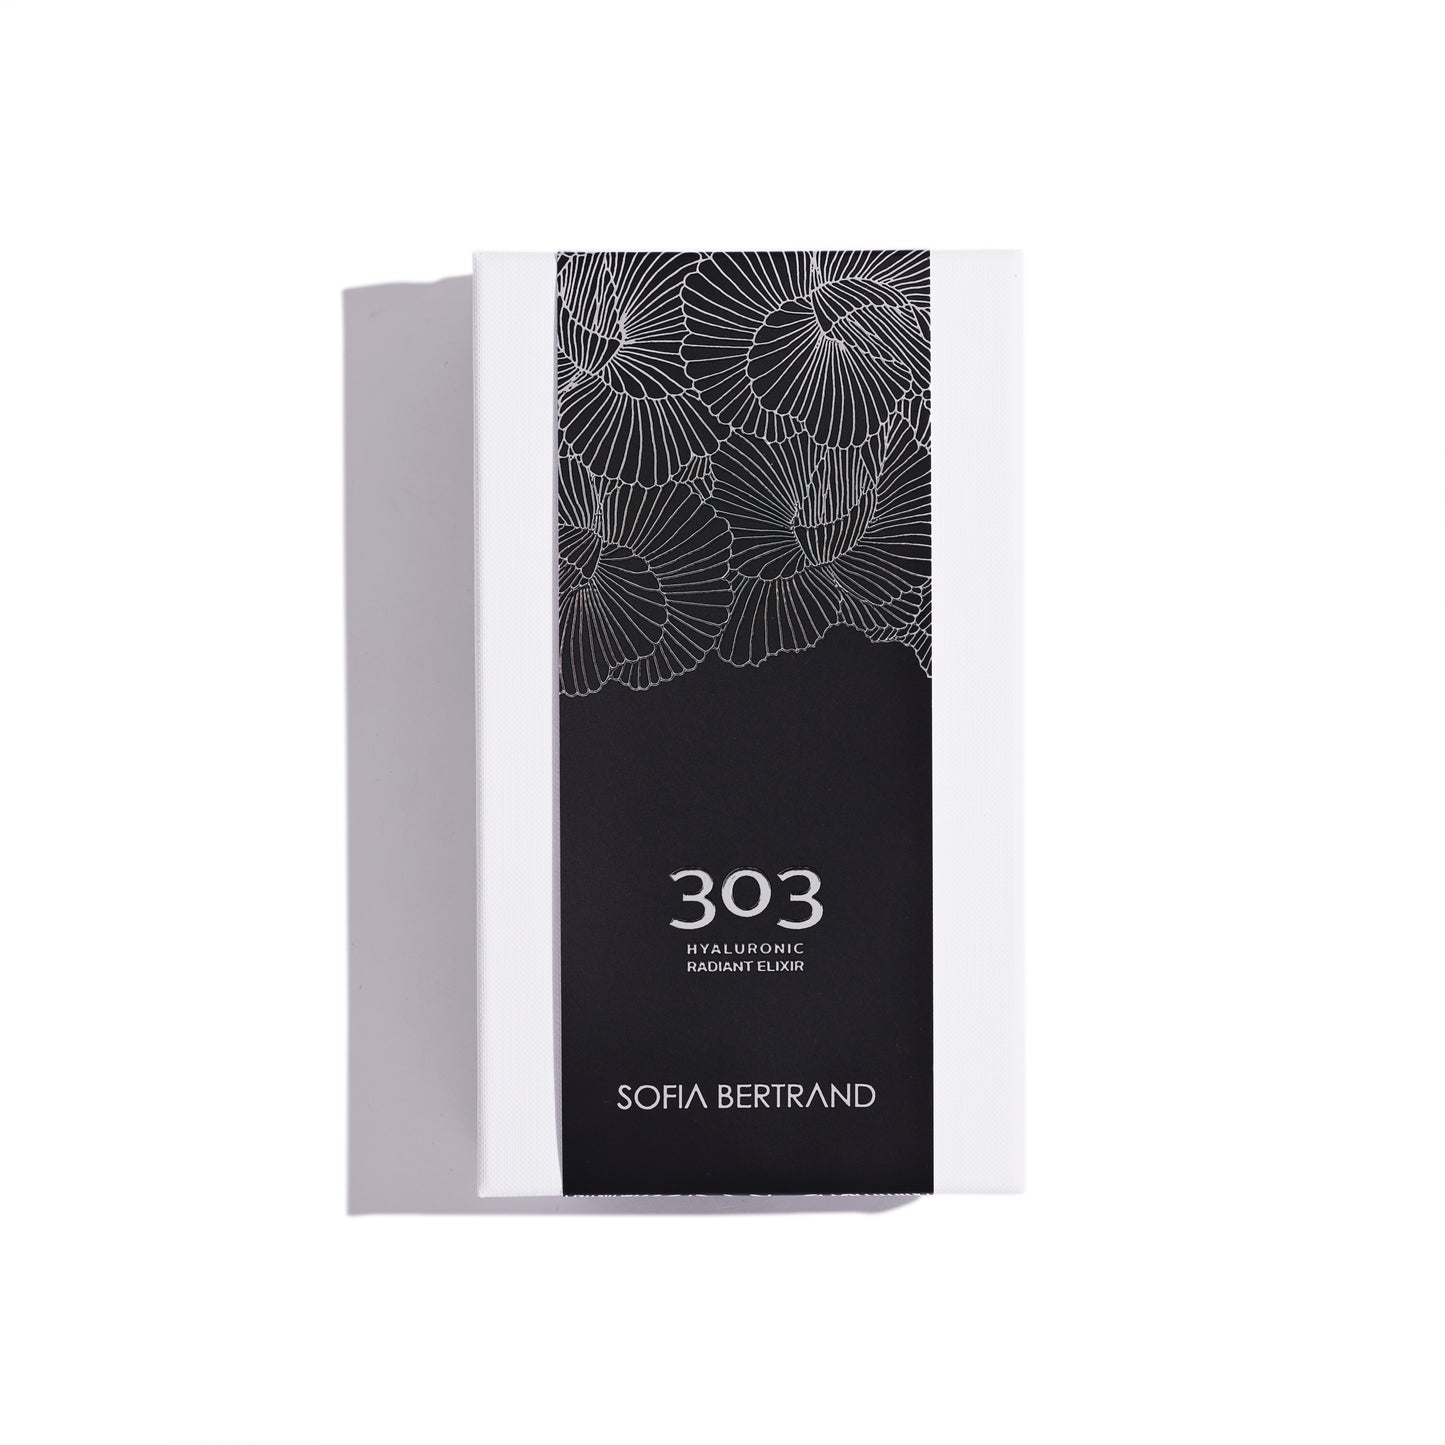 303 Sofia Bertrand Hyaluronic radiant elixir